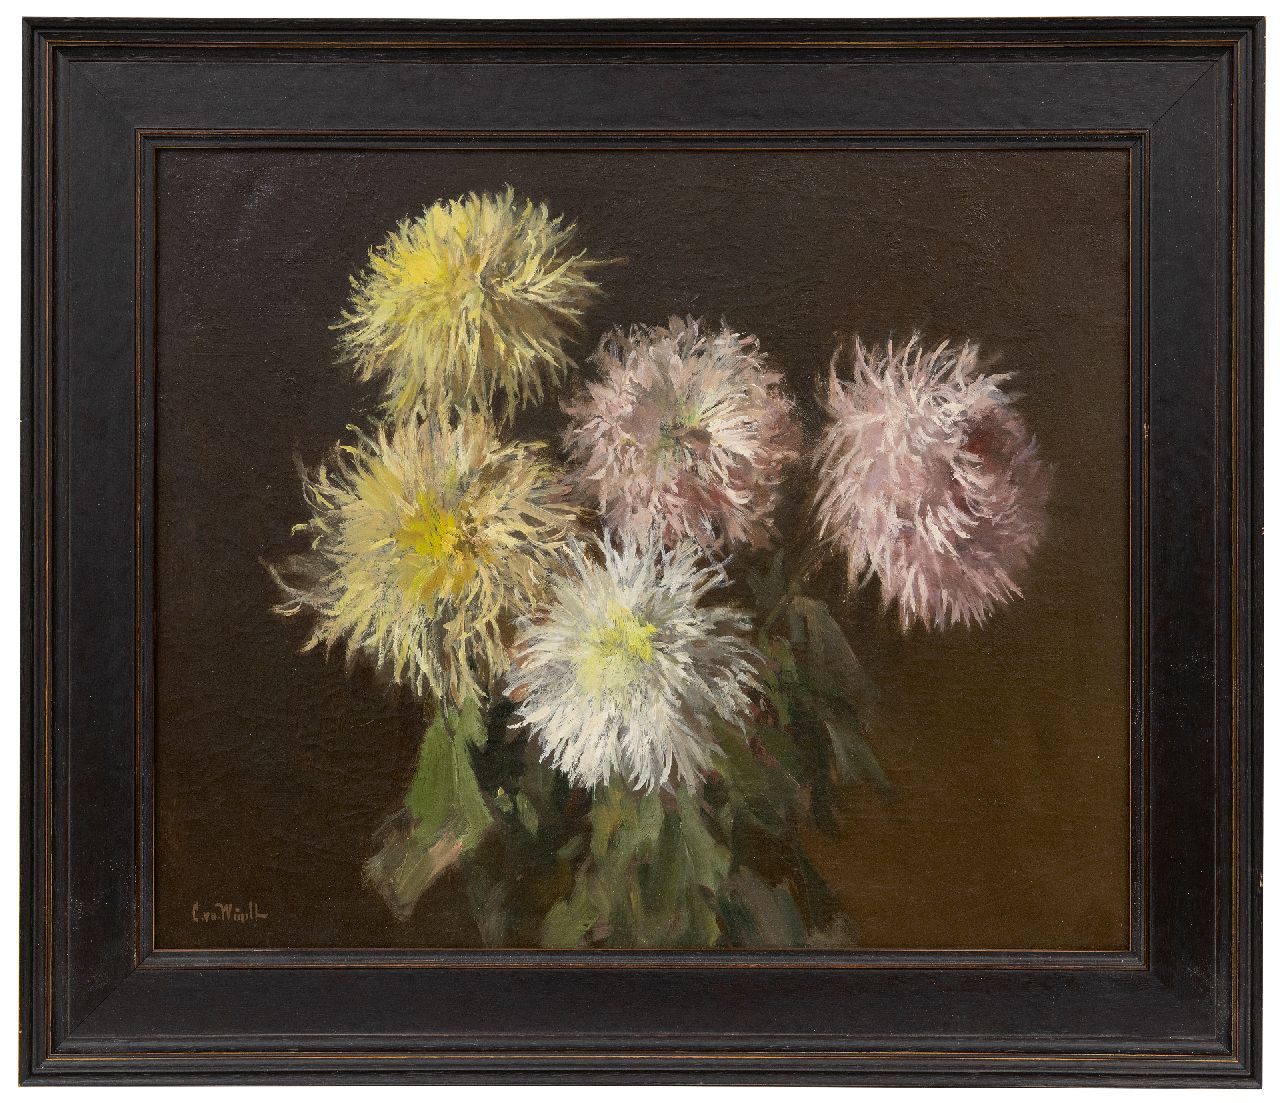 Windt Ch. van der | Christophe 'Chris' van der Windt | Paintings offered for sale | Chrysanthemums, oil on canvas 45.2 x 55.3 cm, signed l.l.